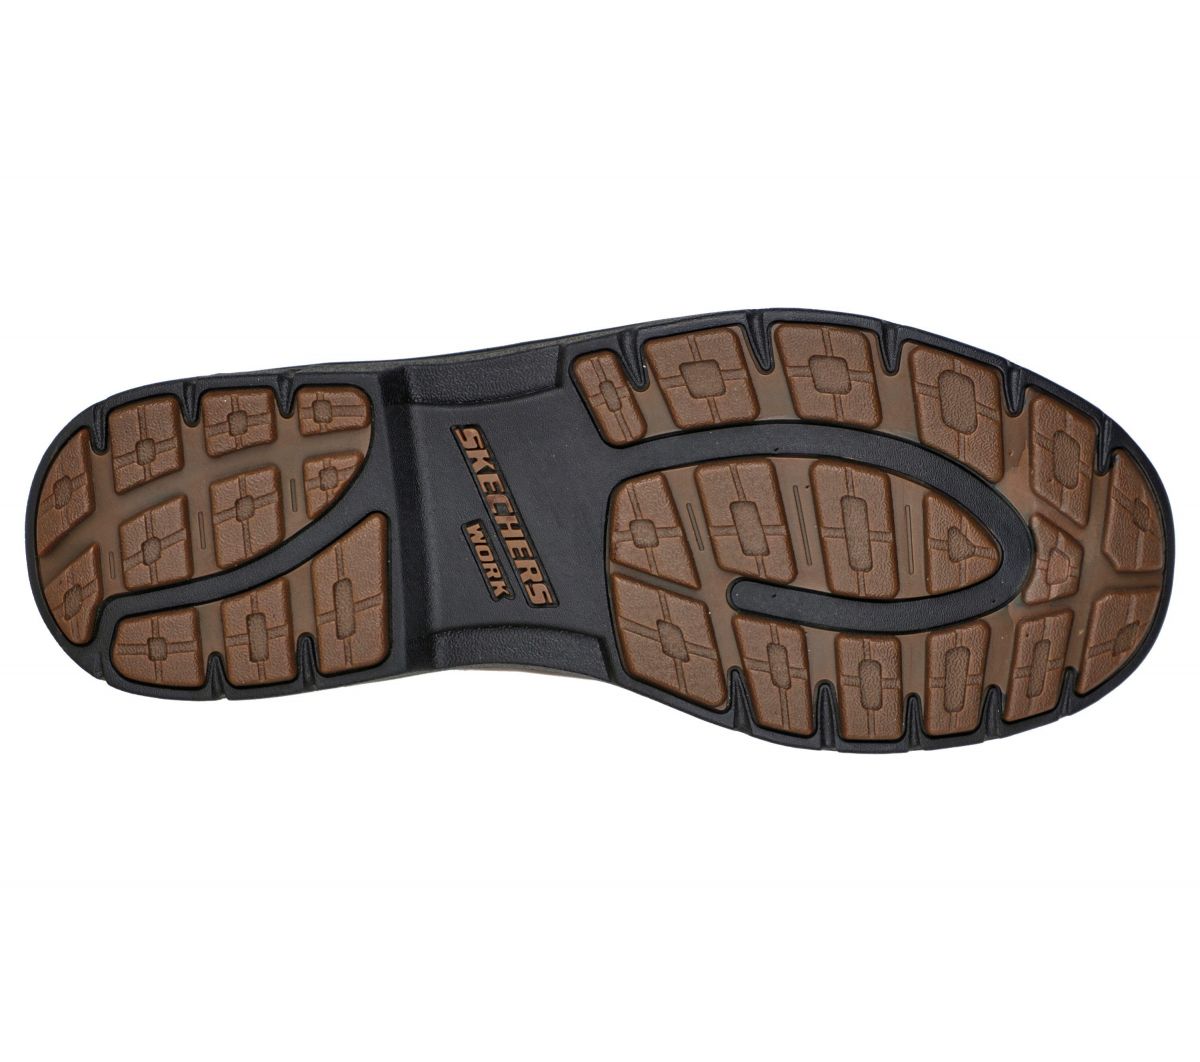 SKECHERS WORK Men's Vicksburk - Rubustle Composite Toe Toe Work Shoe Brown - 200057-CDB